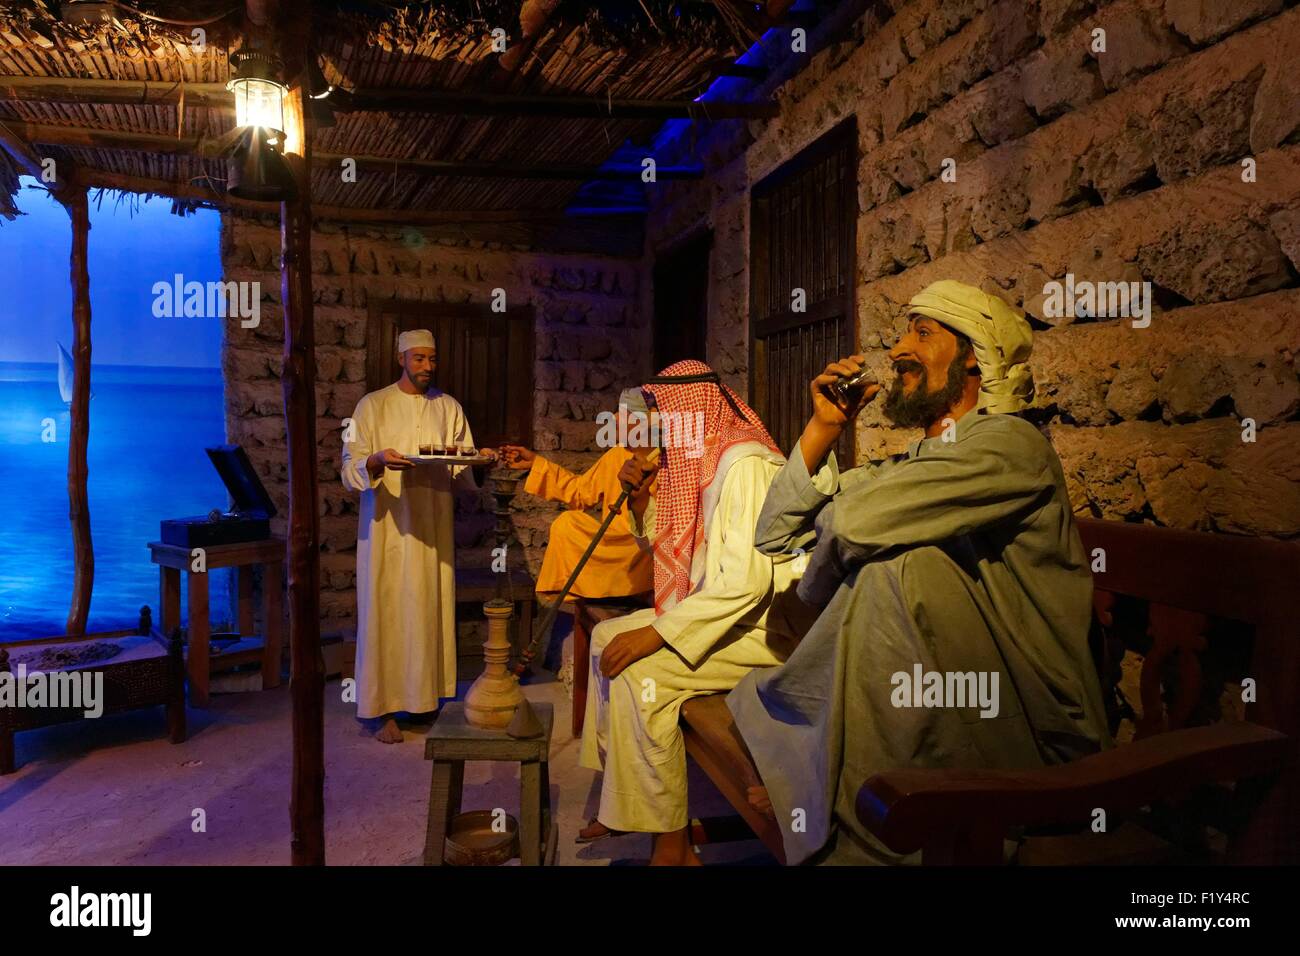 United Arab Emirates, Dubai, Bur Dubai, Dubai Museum, Al-Fahidi fort, traditional village scenography Stock Photo